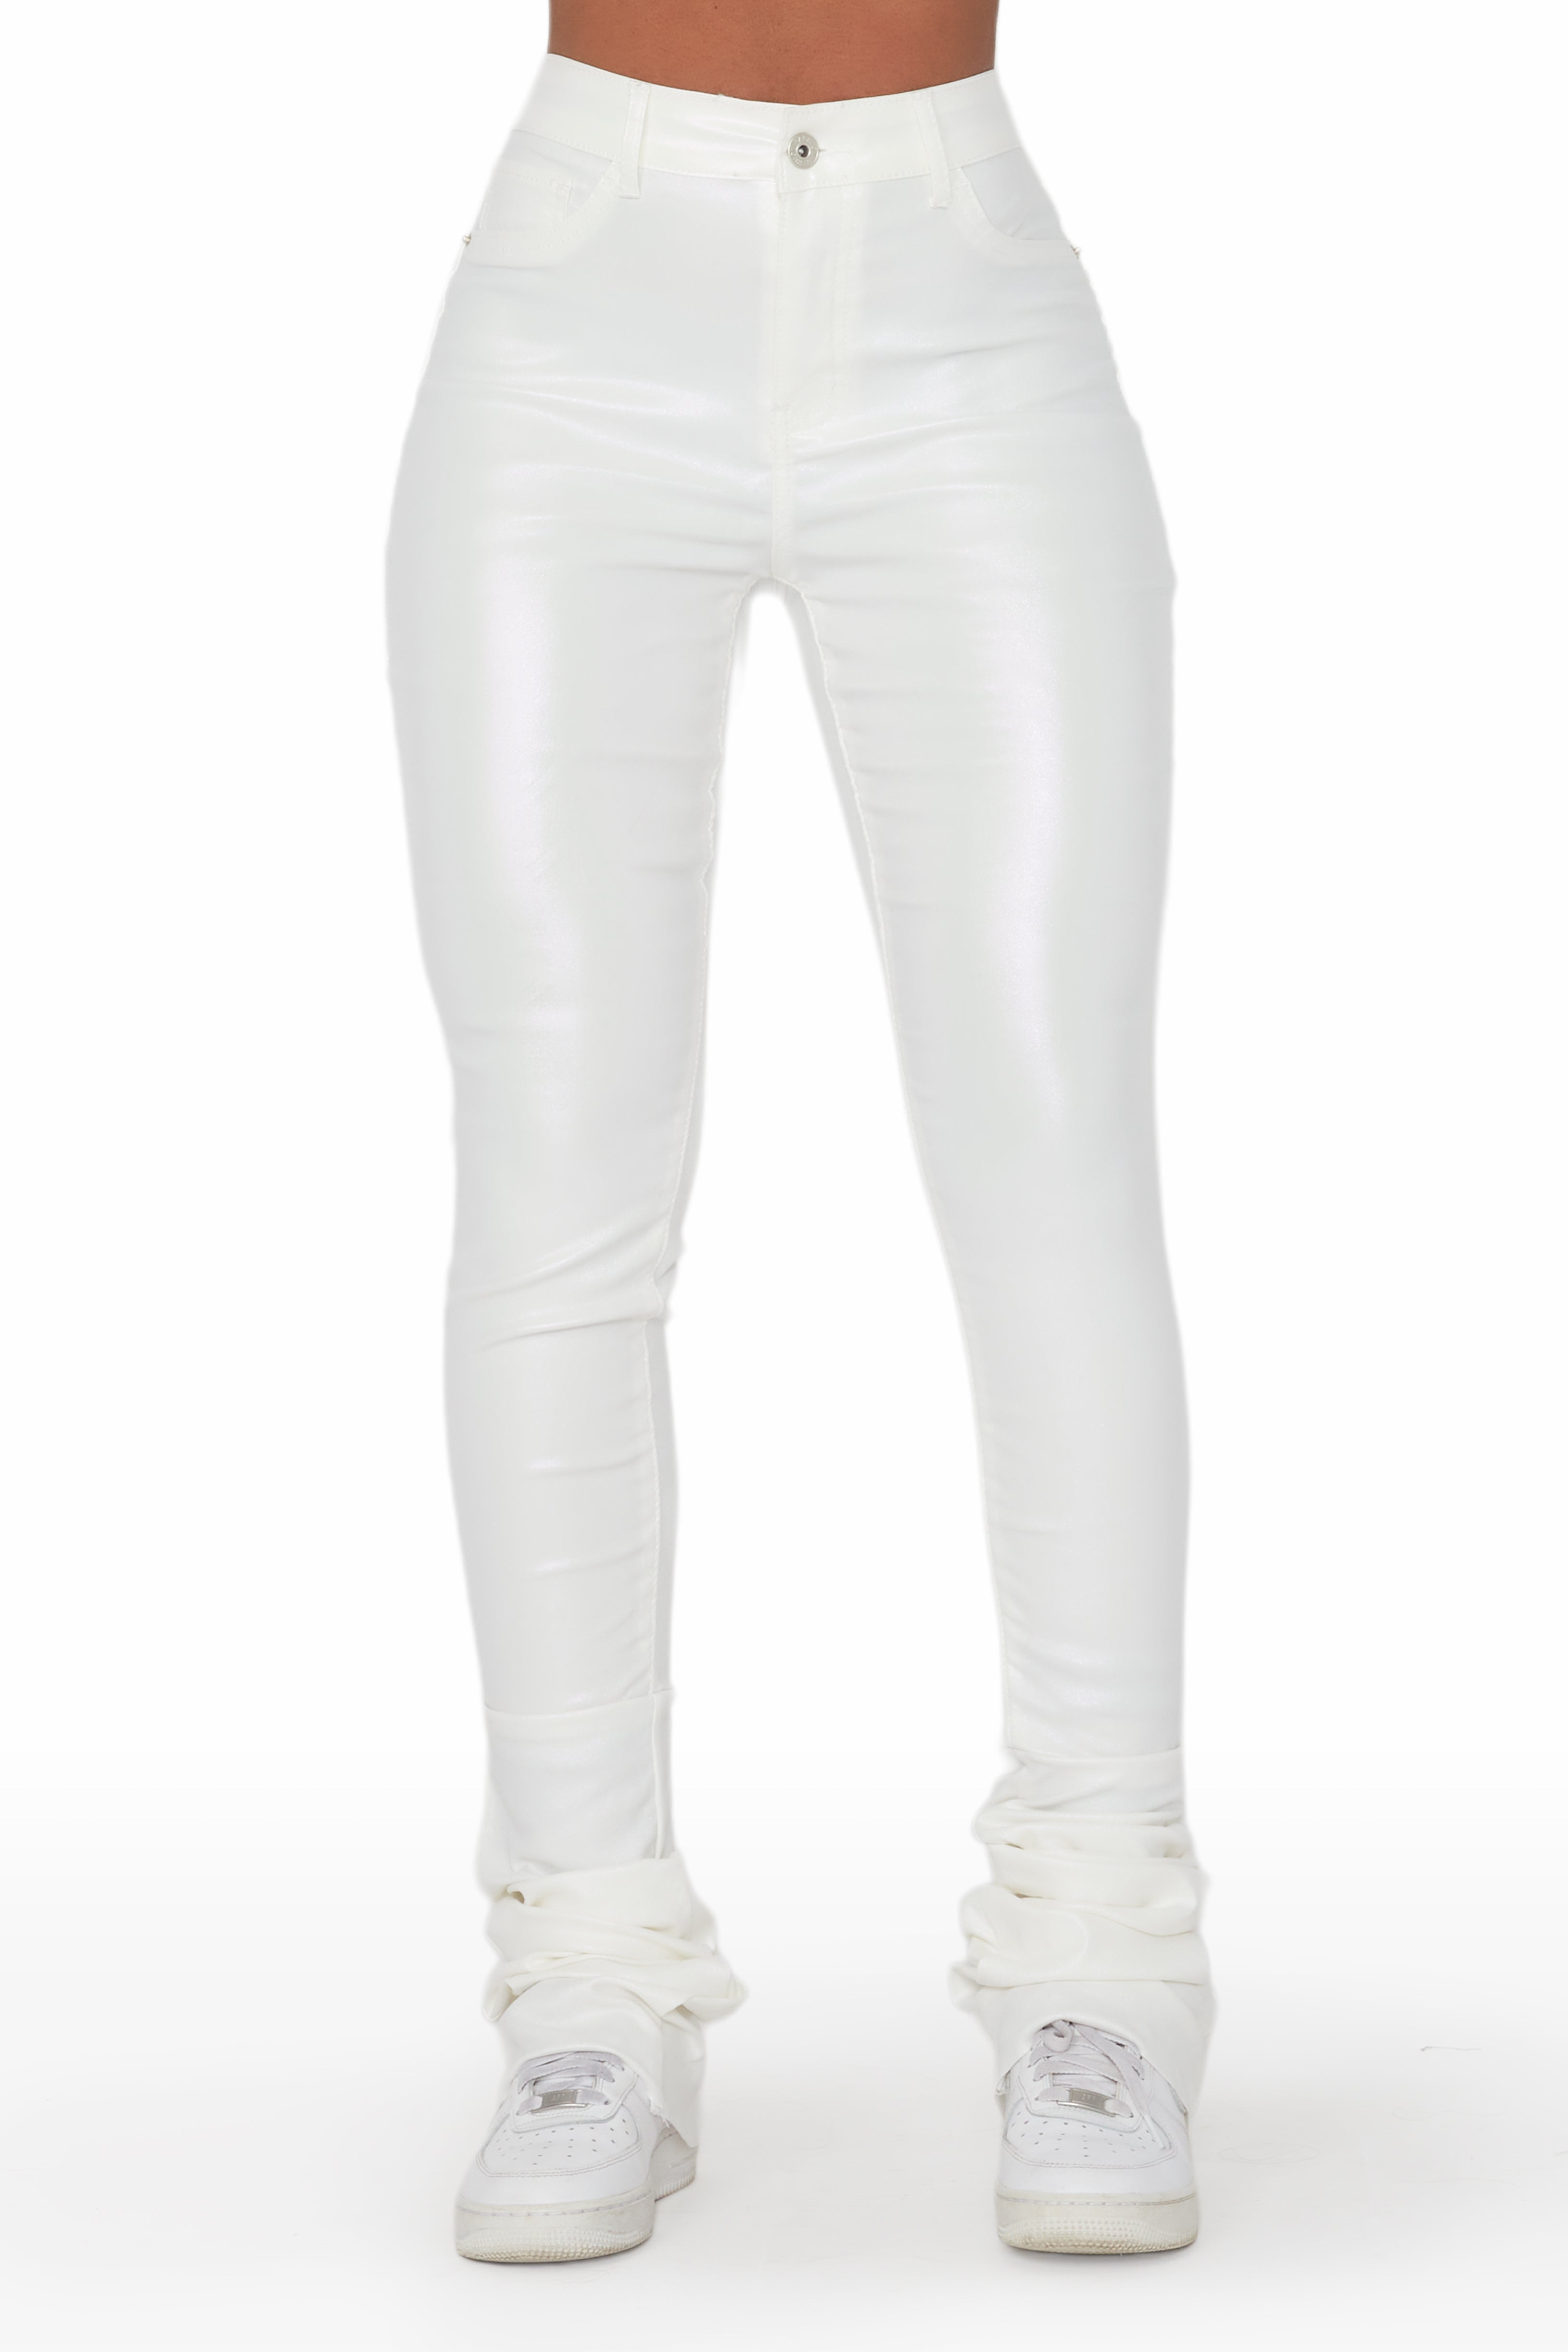 Zaniyah Metallic White PU Super Stacked Pant– Rockstar Original